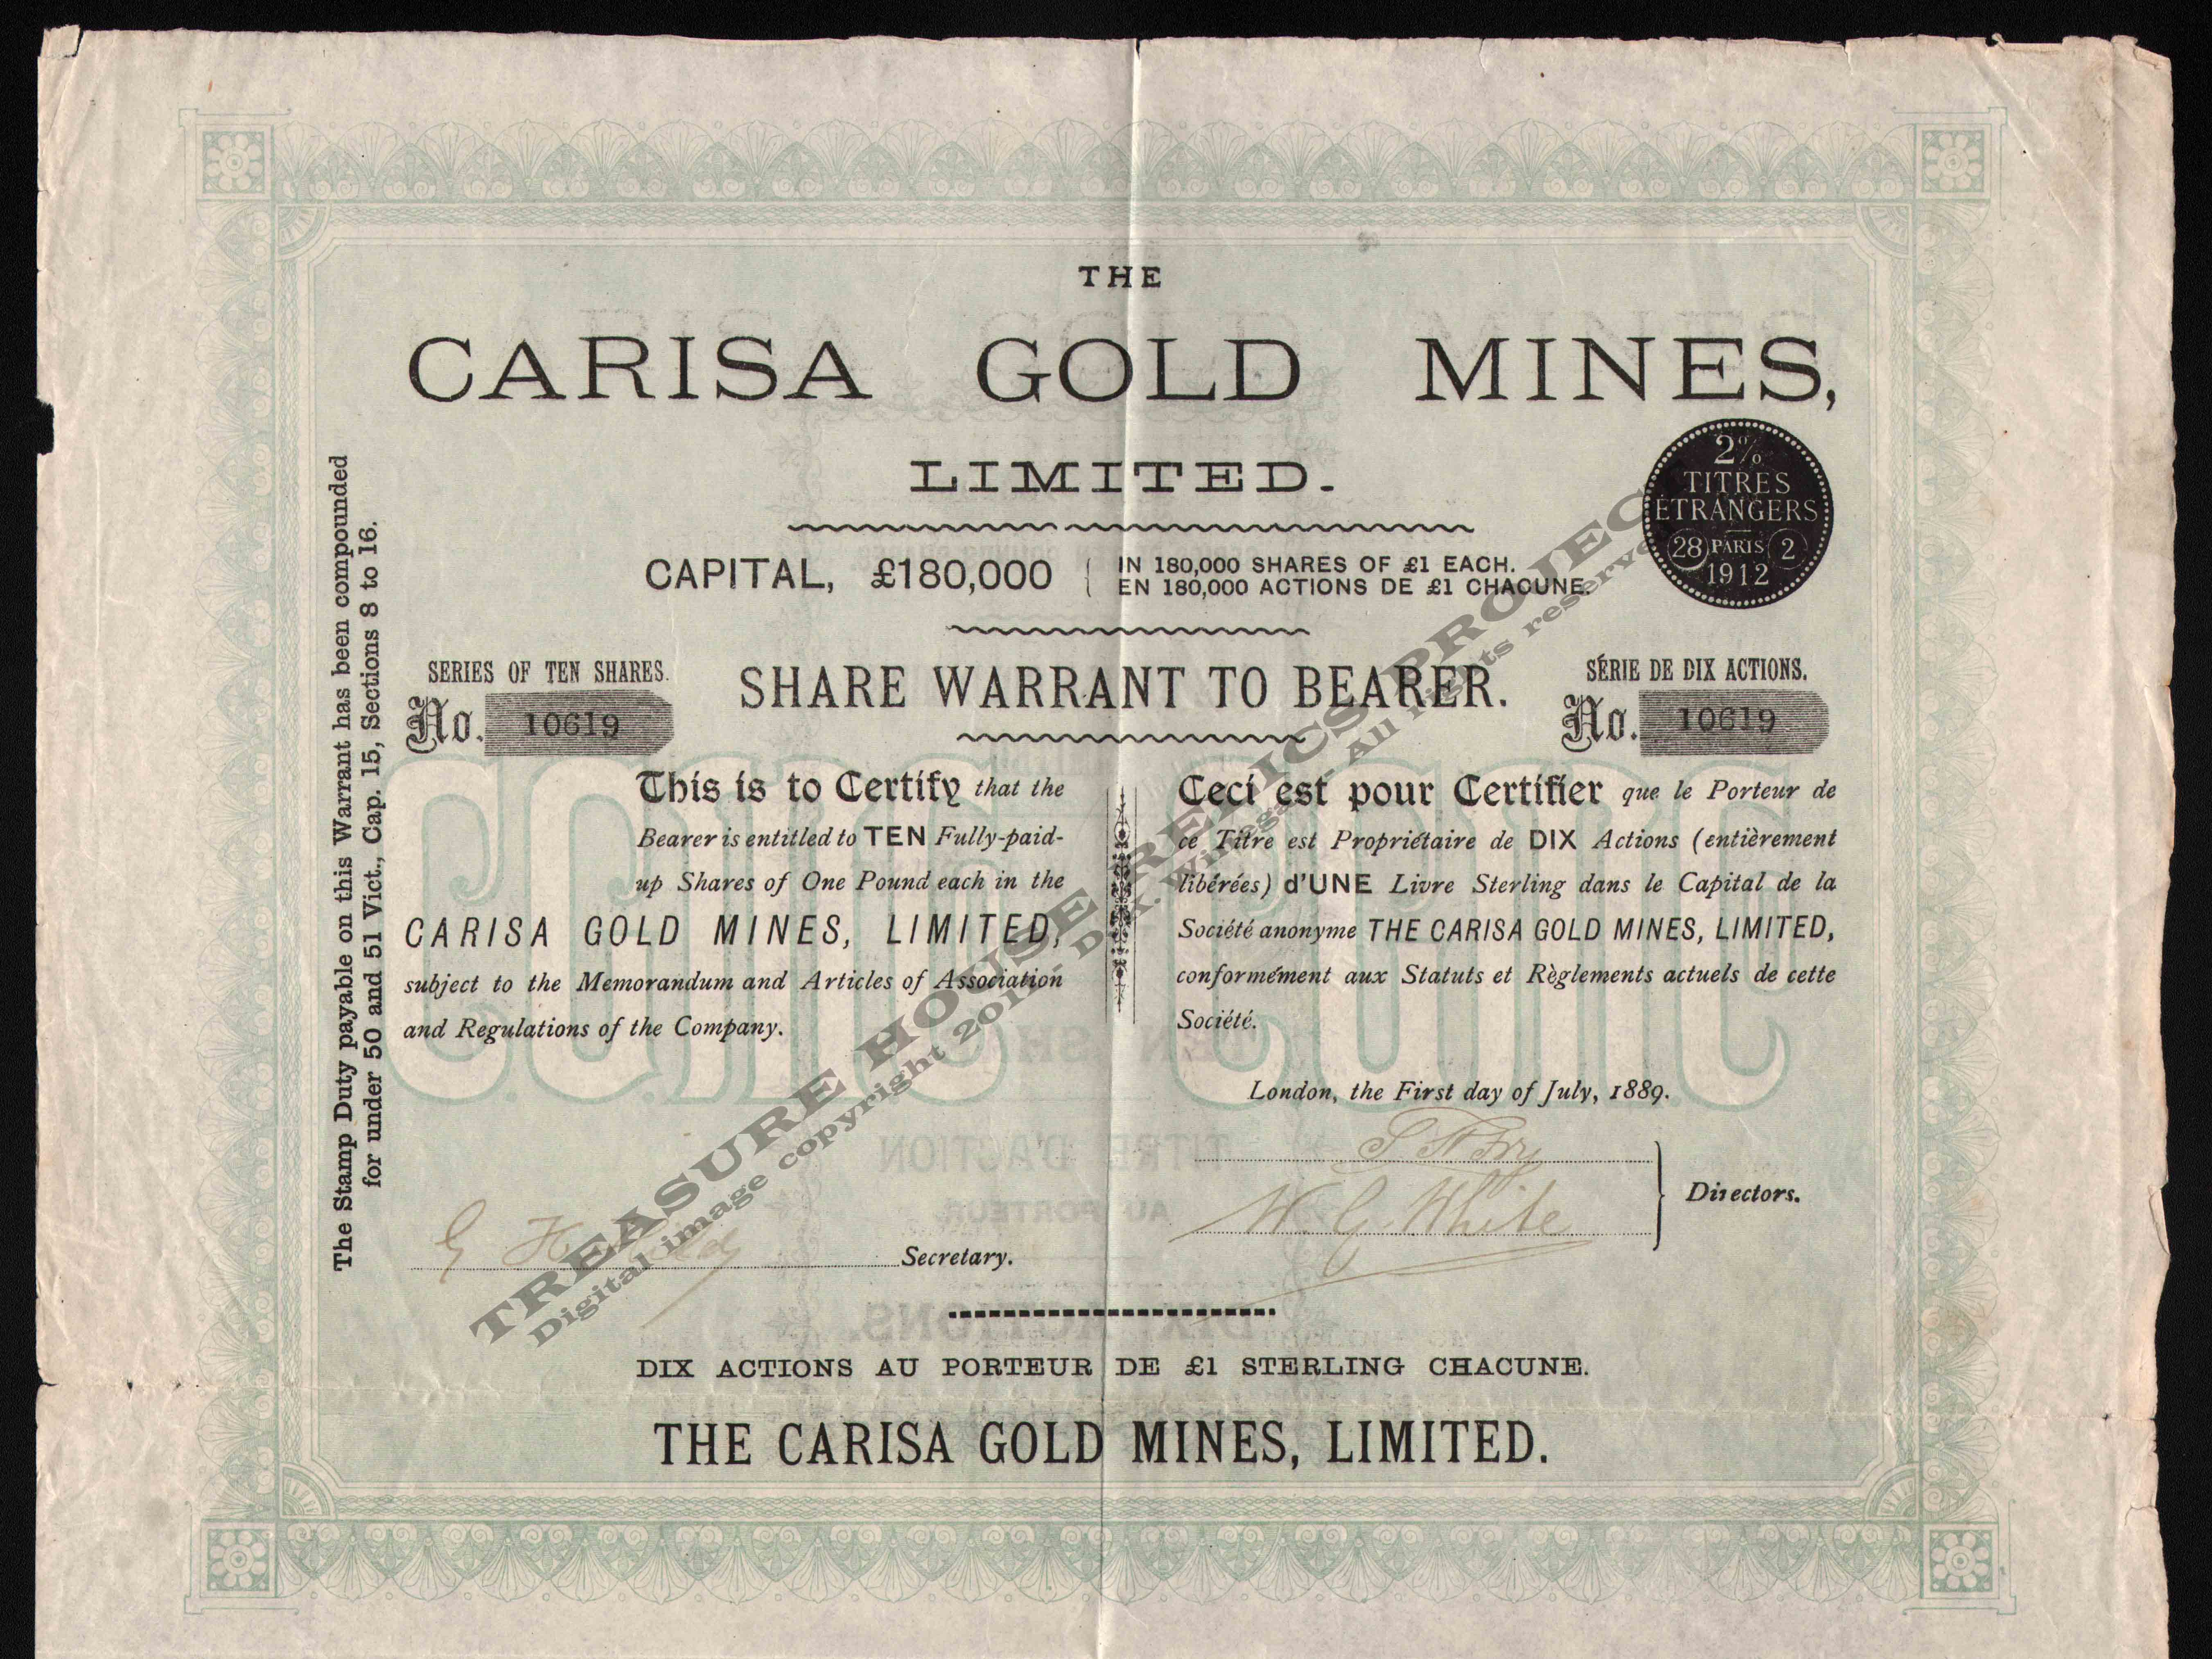 CARISA_GOLD_MINES_CO_10619_1889_400_emboss.jpg